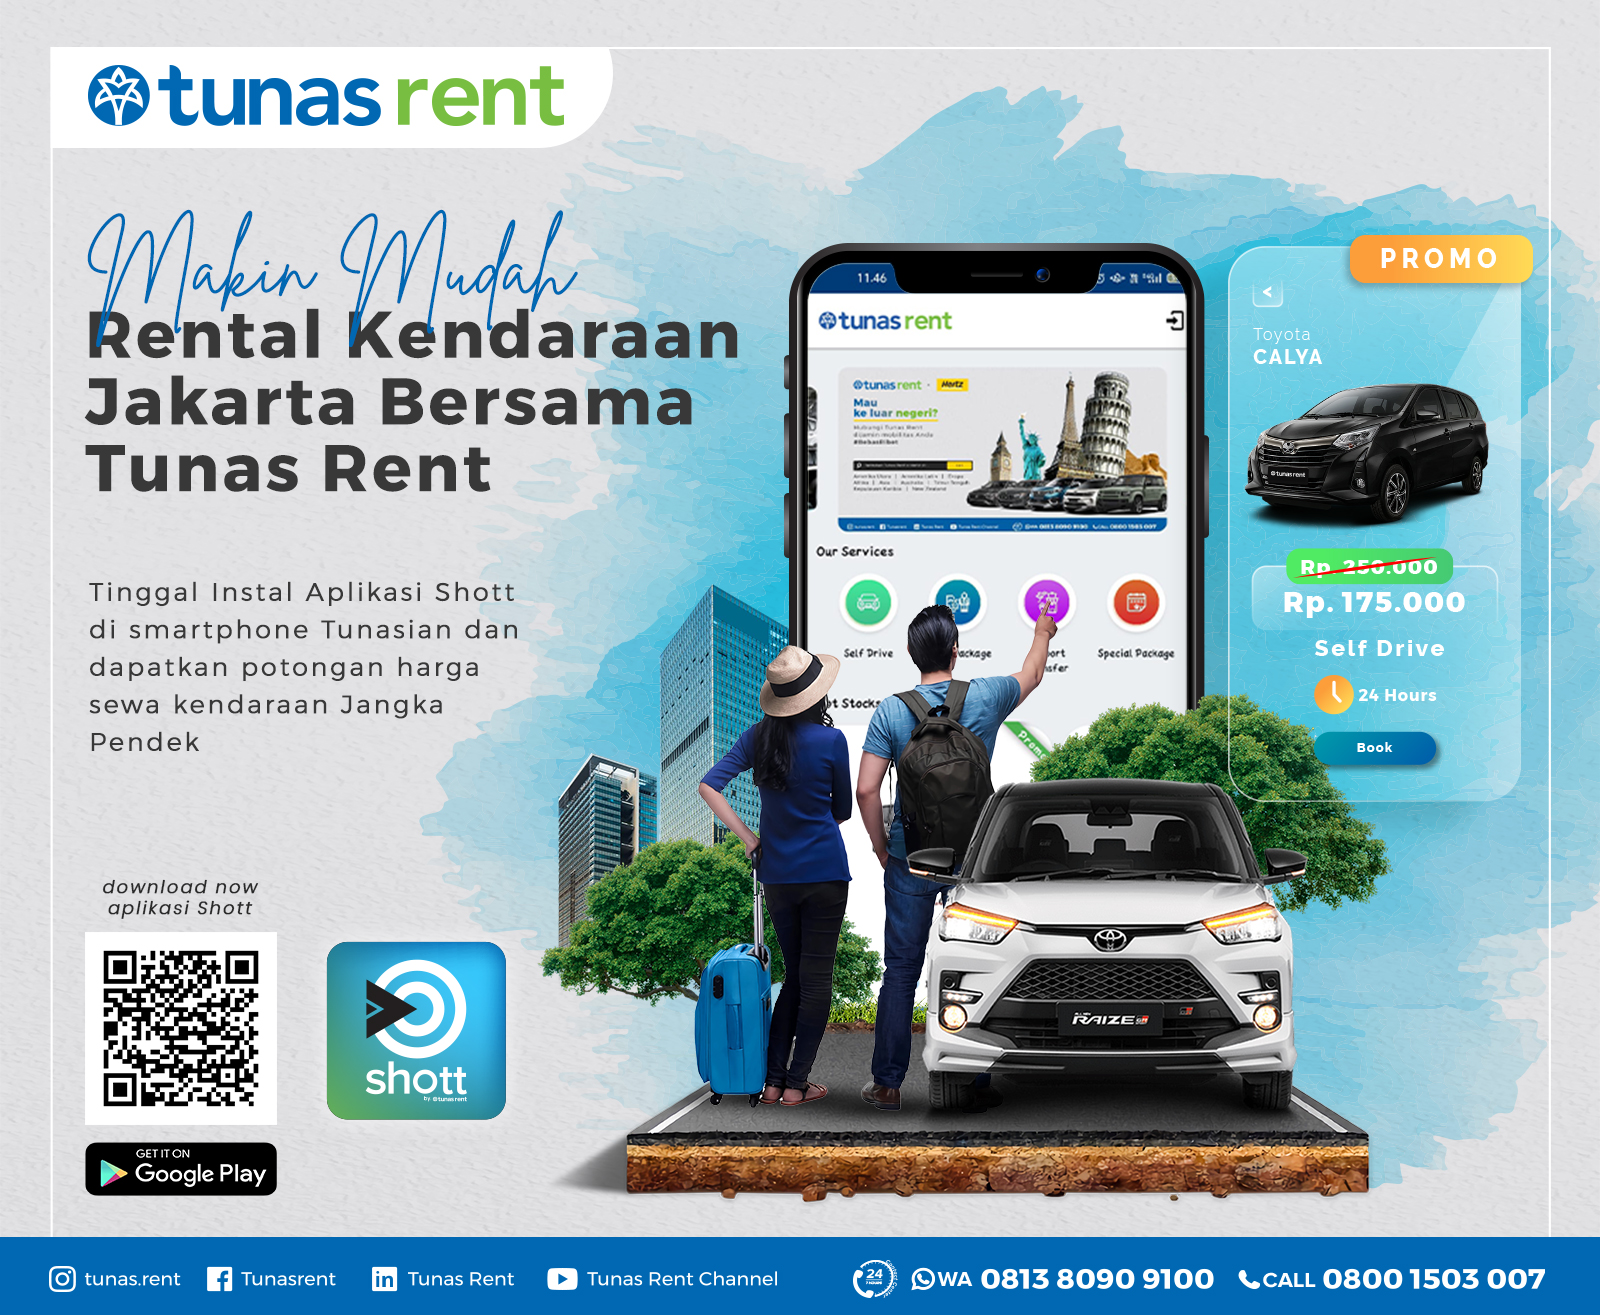 Makin Mudah Rental Kendaraan Jakarta Bersama Tunas Rent Melalui Aplikasi Shott